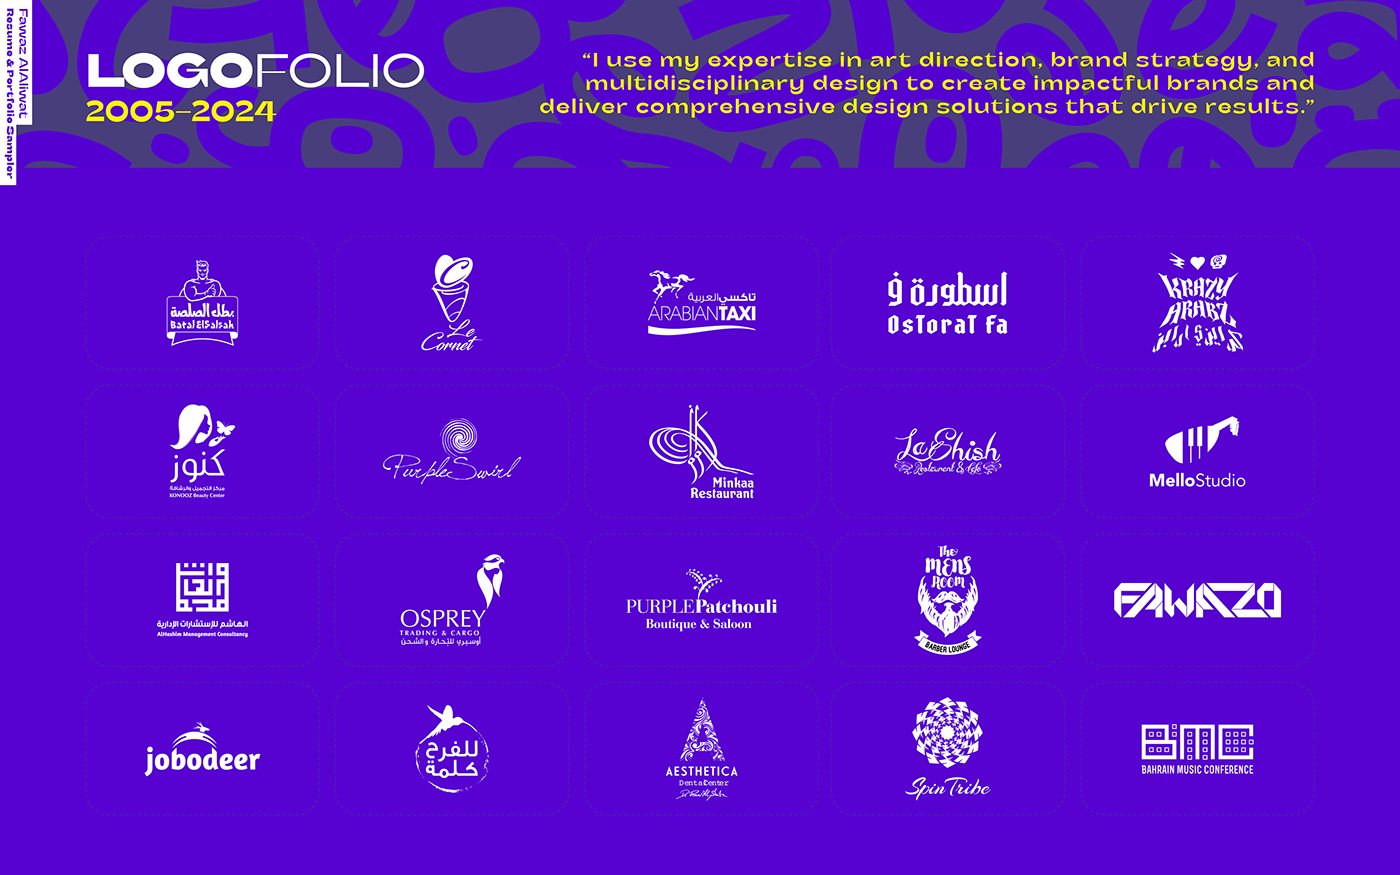 Fawazo, Fawaz AlAliwat Resume & Portfolio sampler, Logofolio